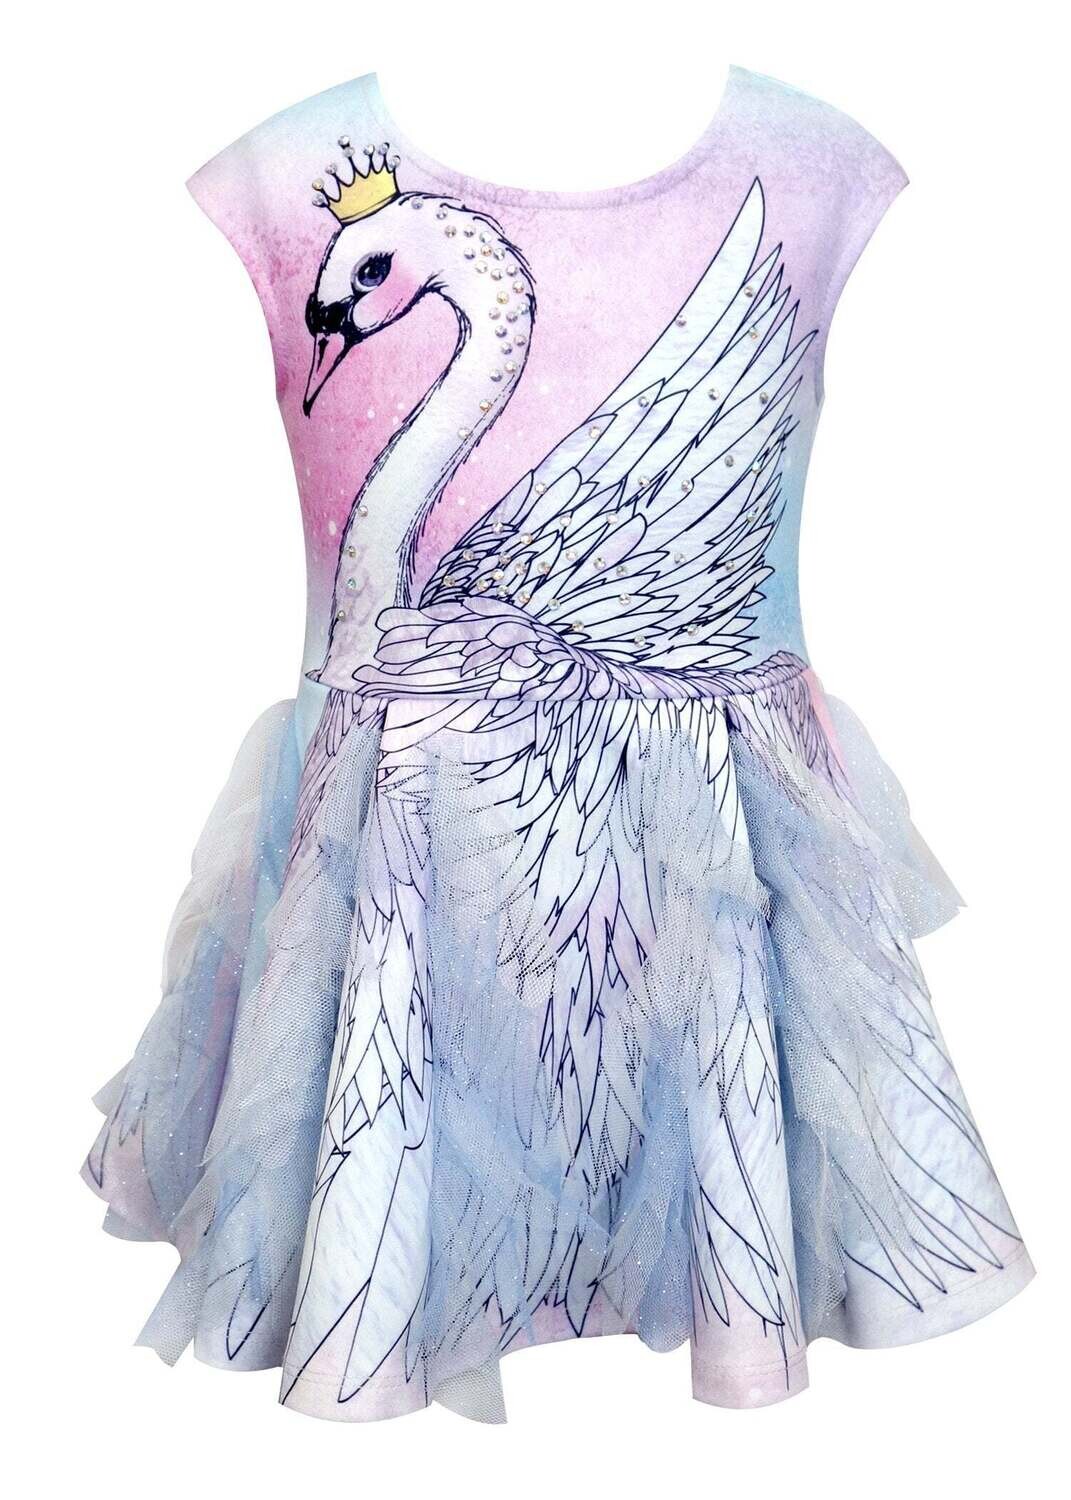 Baby Sara Swan Princess Dress